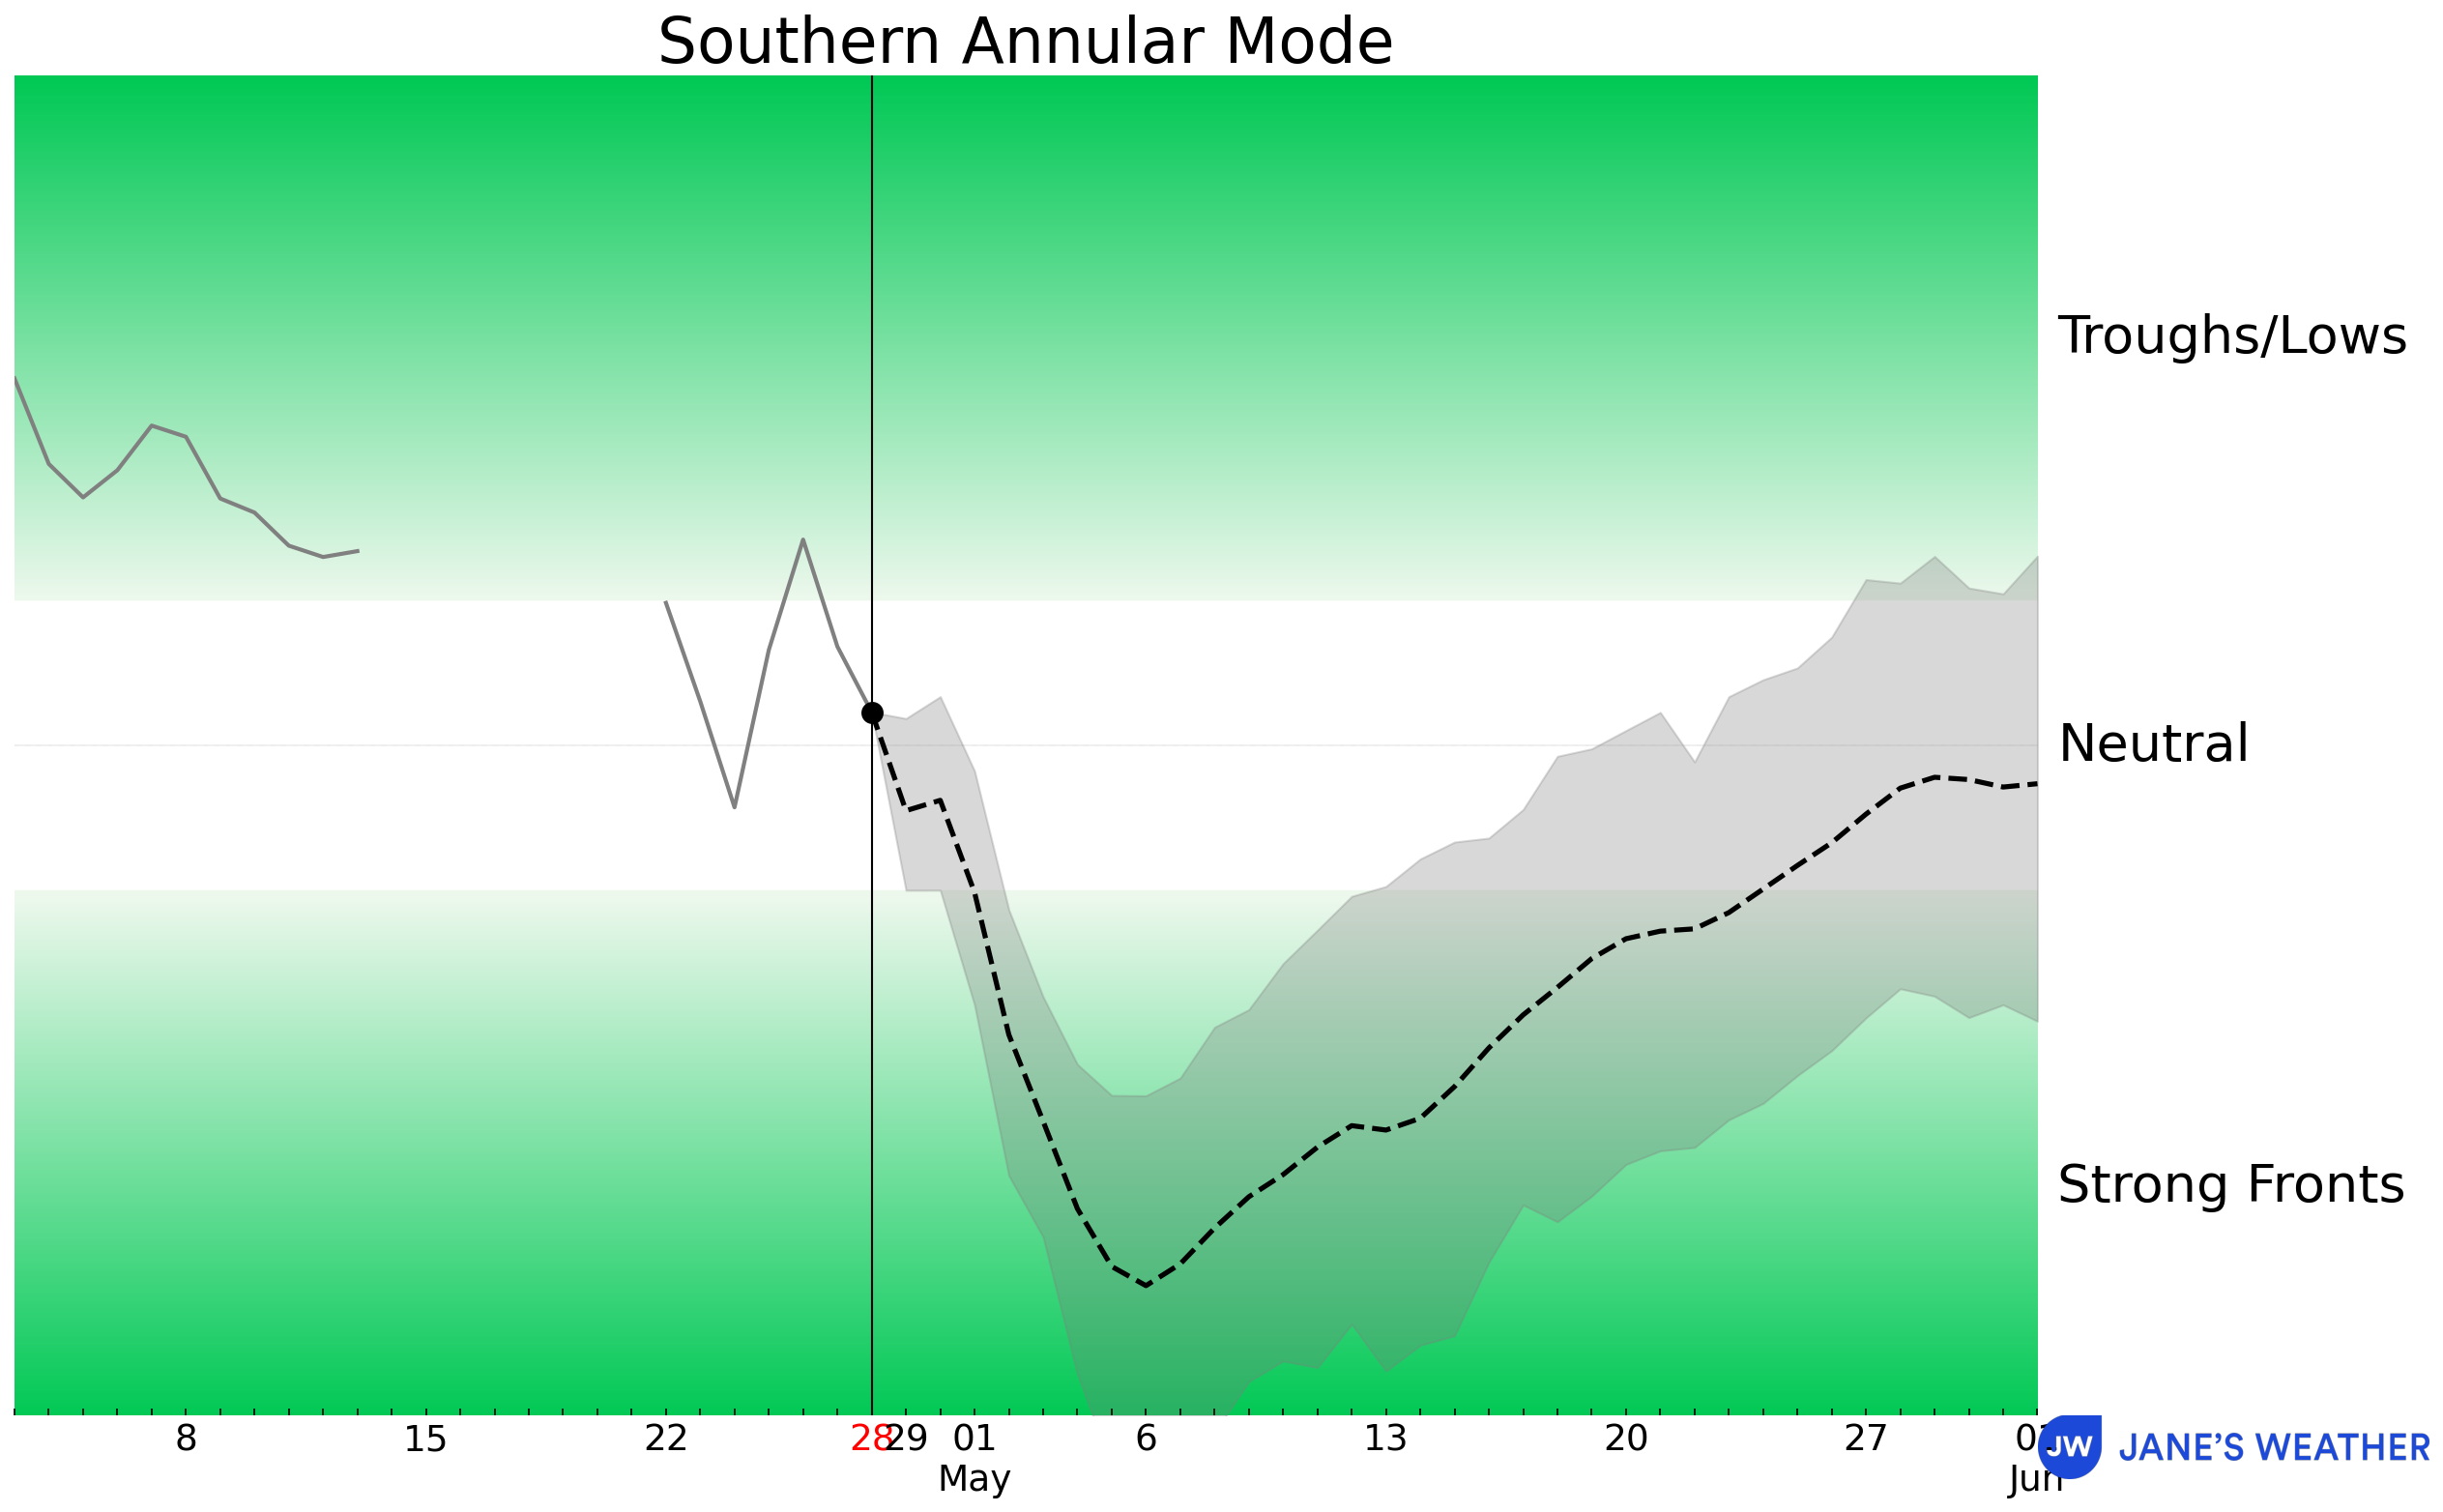 Southern Annular Mode Index (SAM)